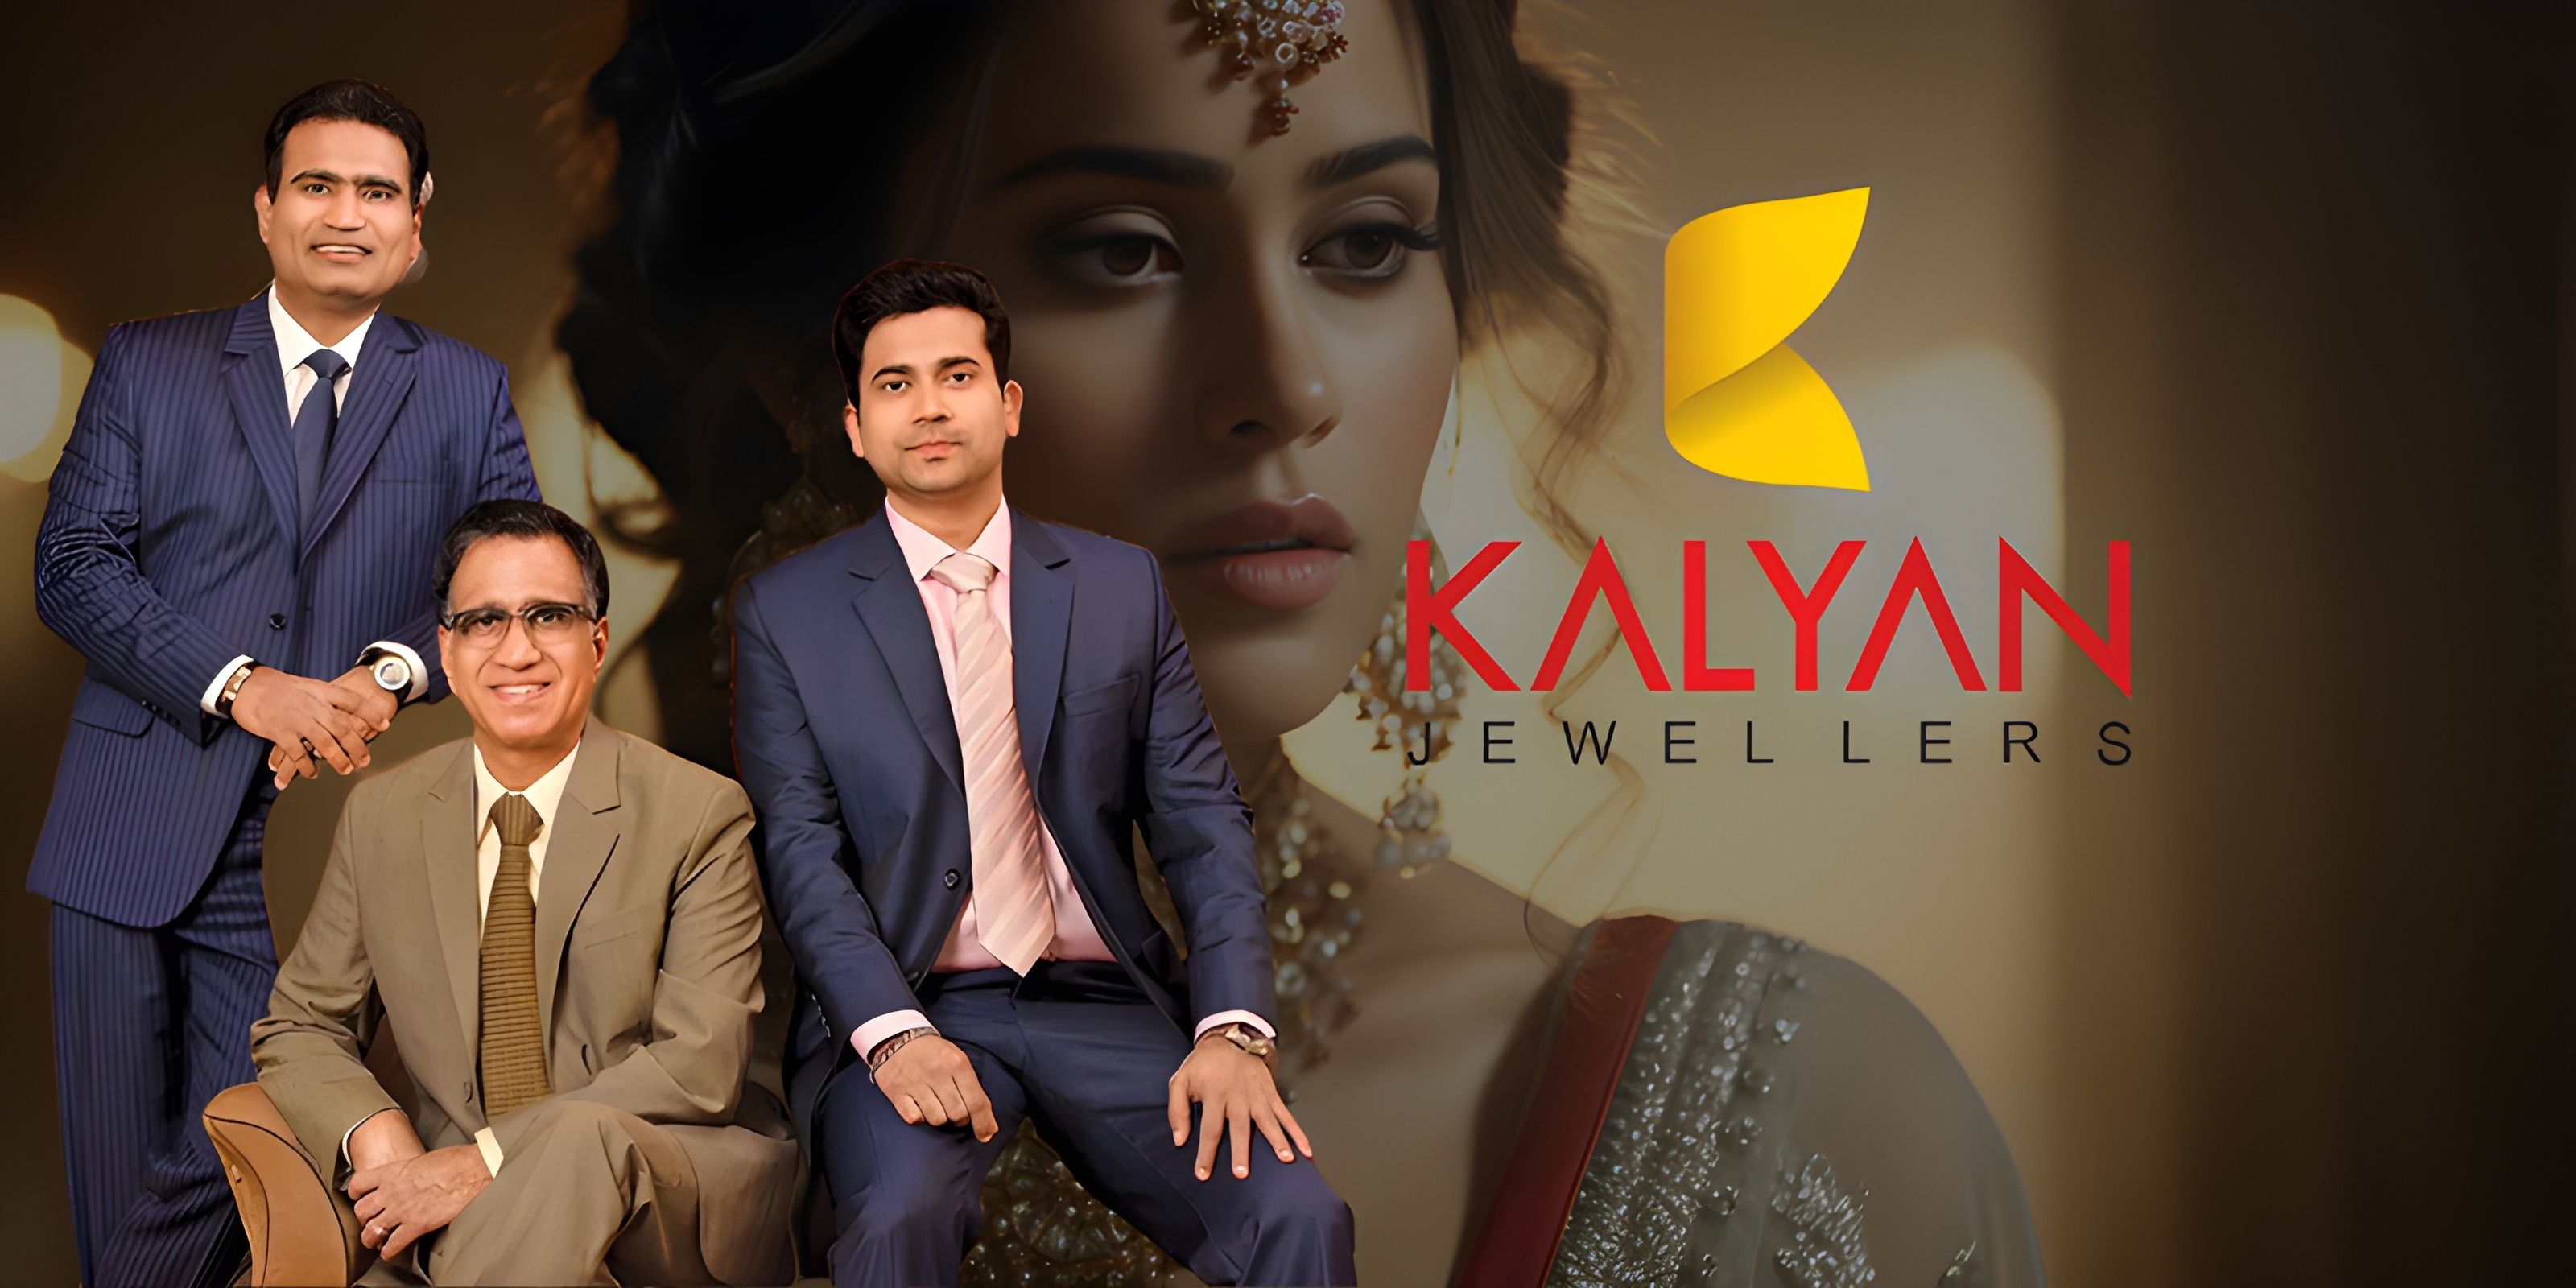 Kalyan Jewellers: A Century-Long Journey of Trust